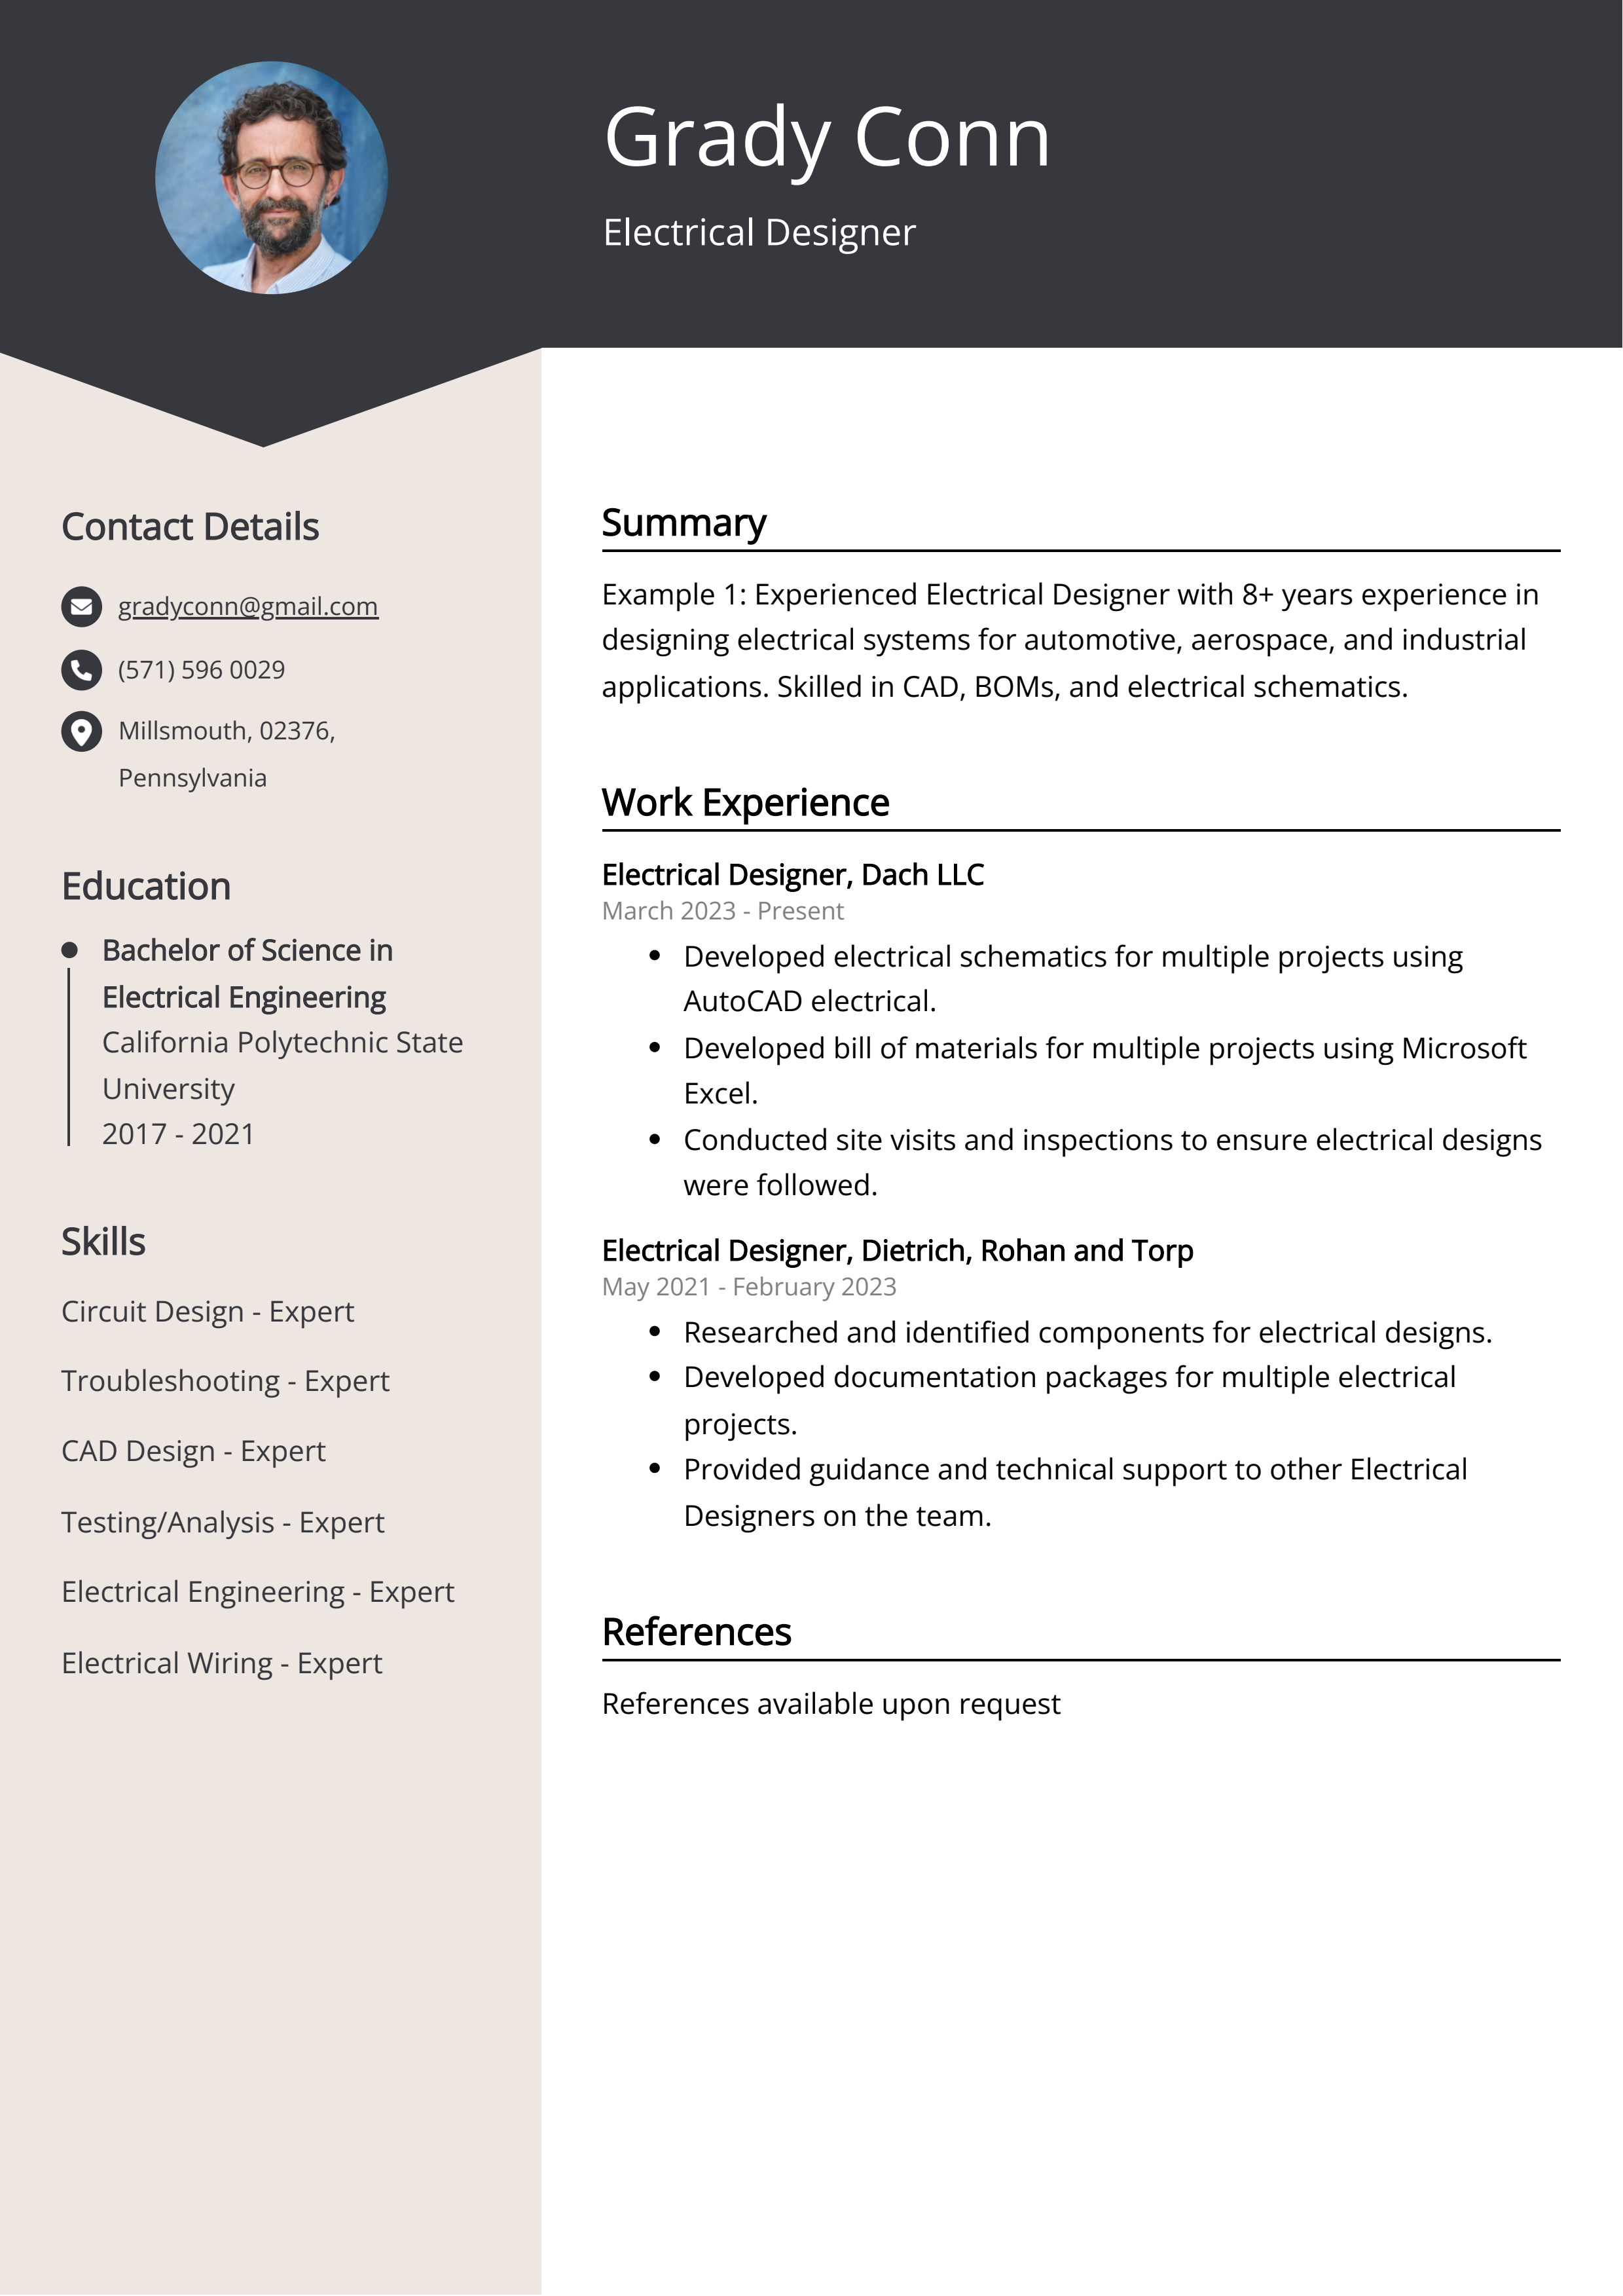 Electrical Designer CV Example